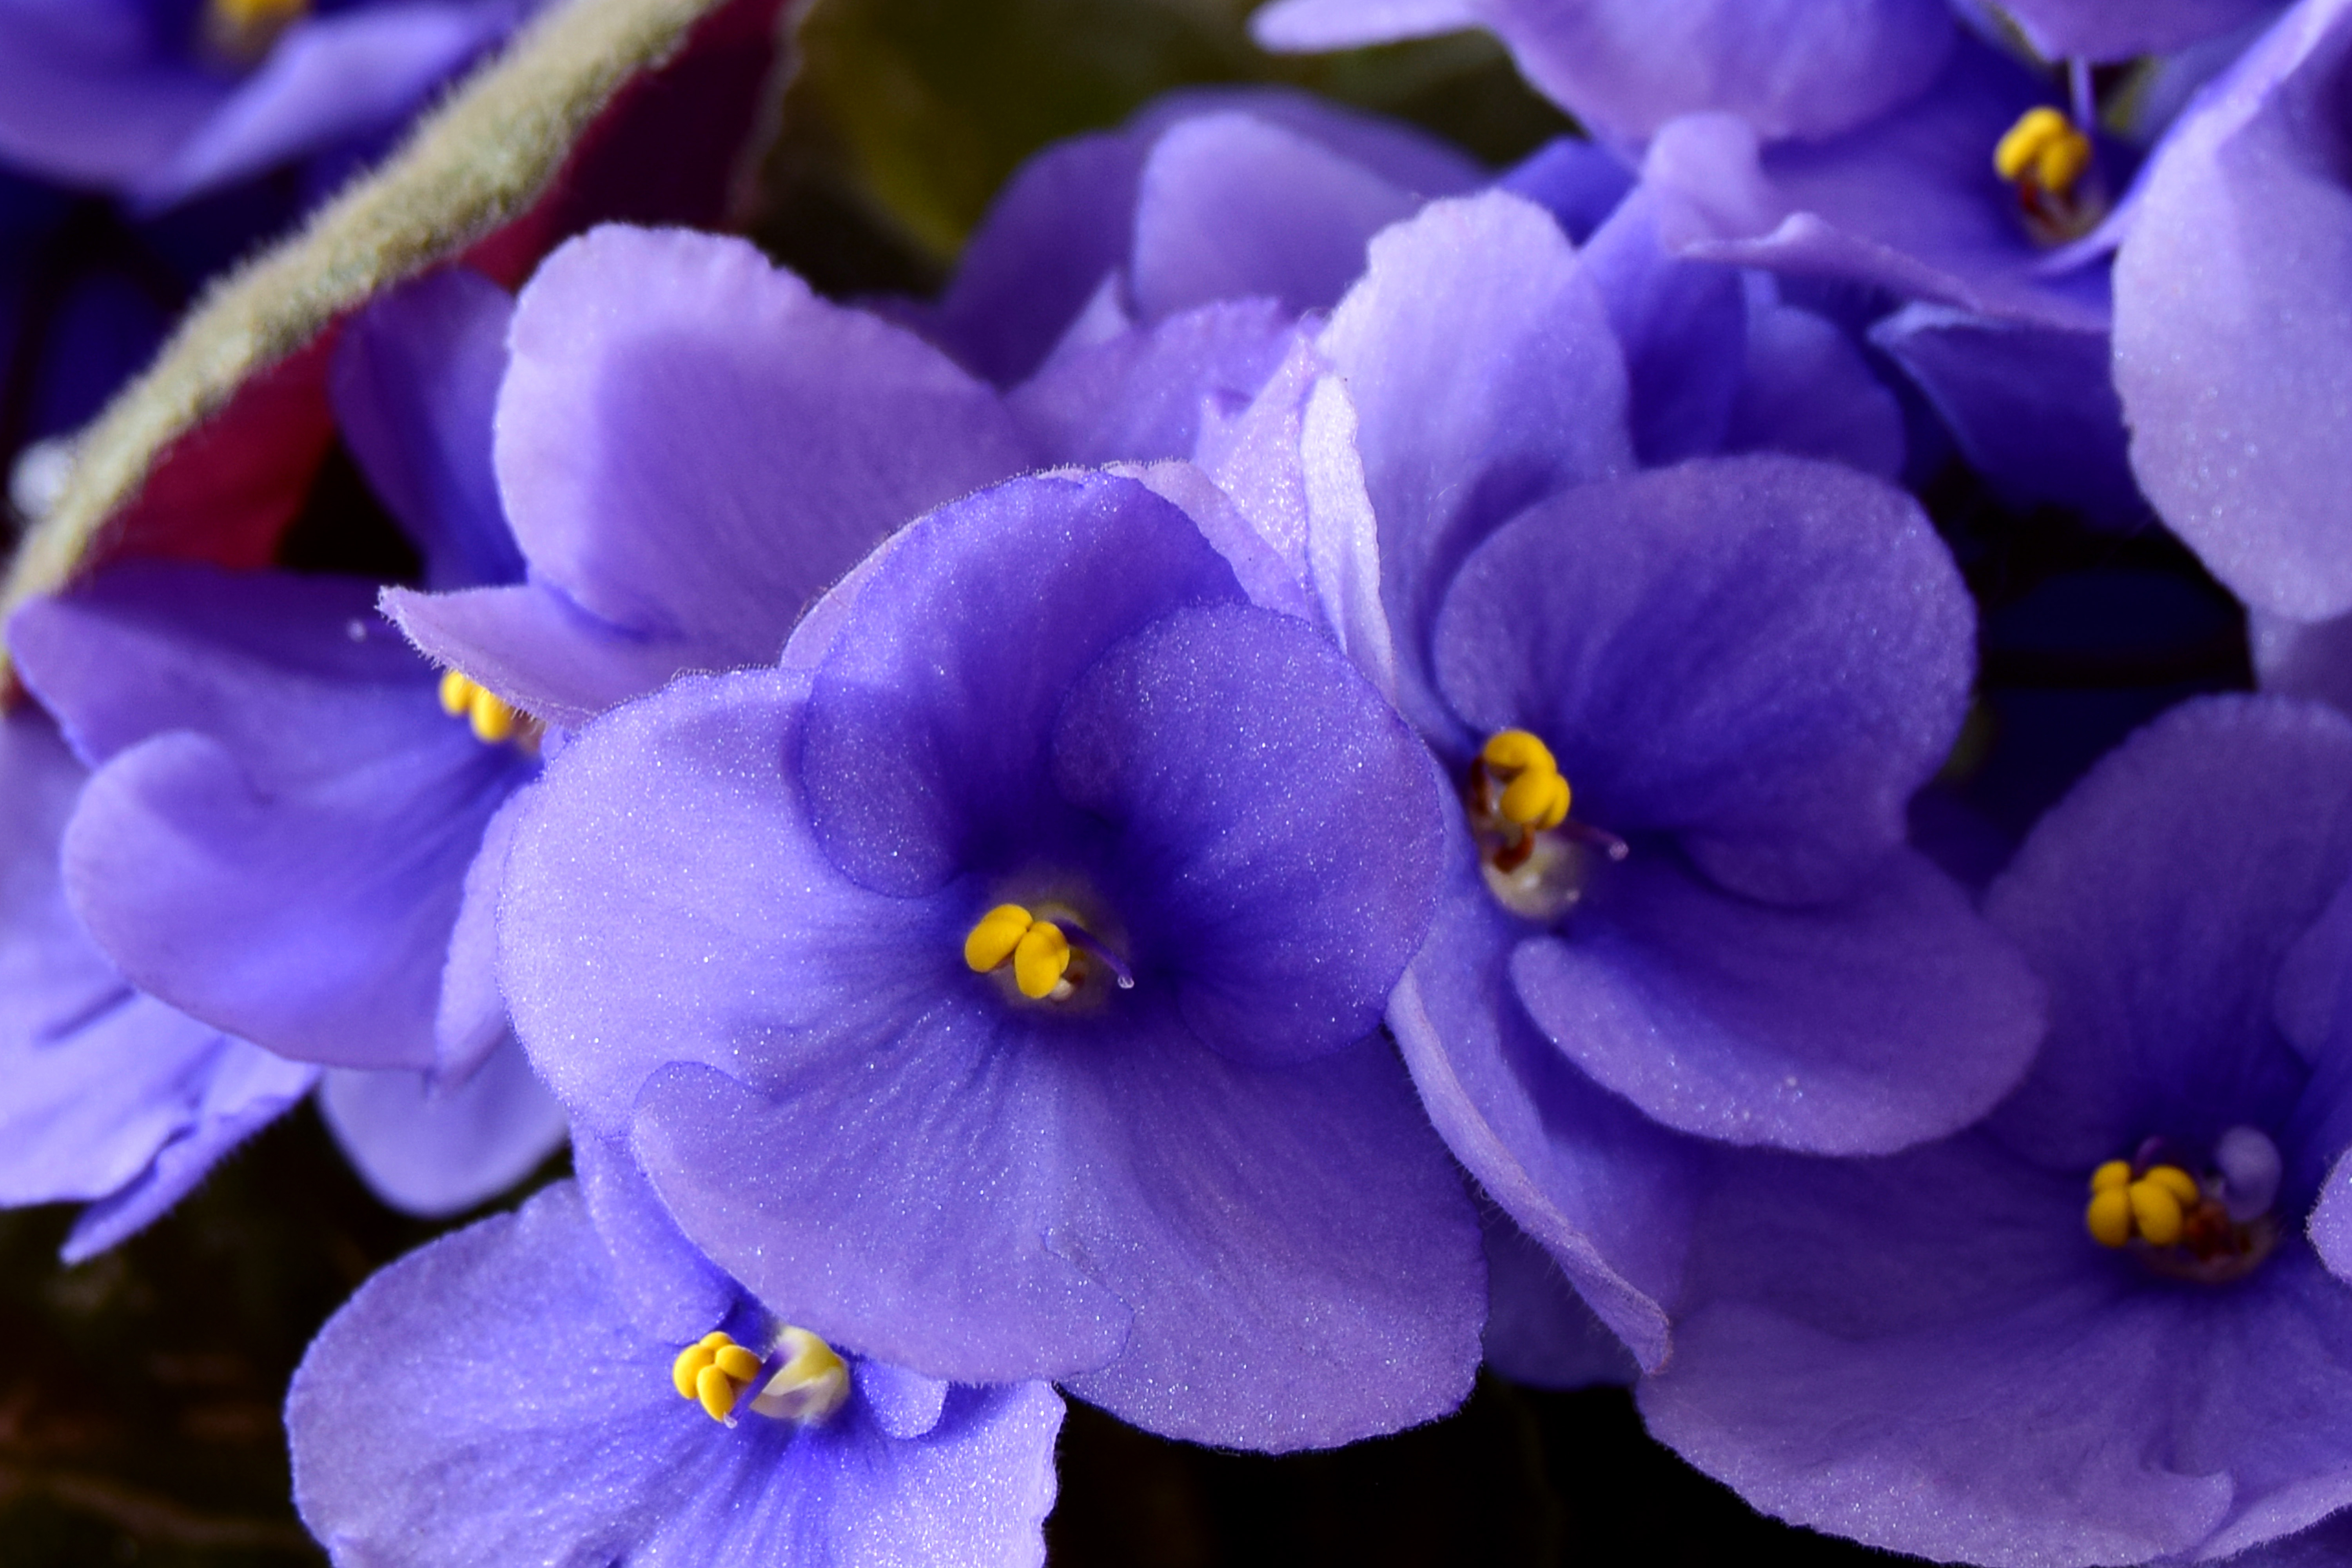 Purple Saintpaulias flowers commonly known as African violets. Violet flowers close up, soft focus